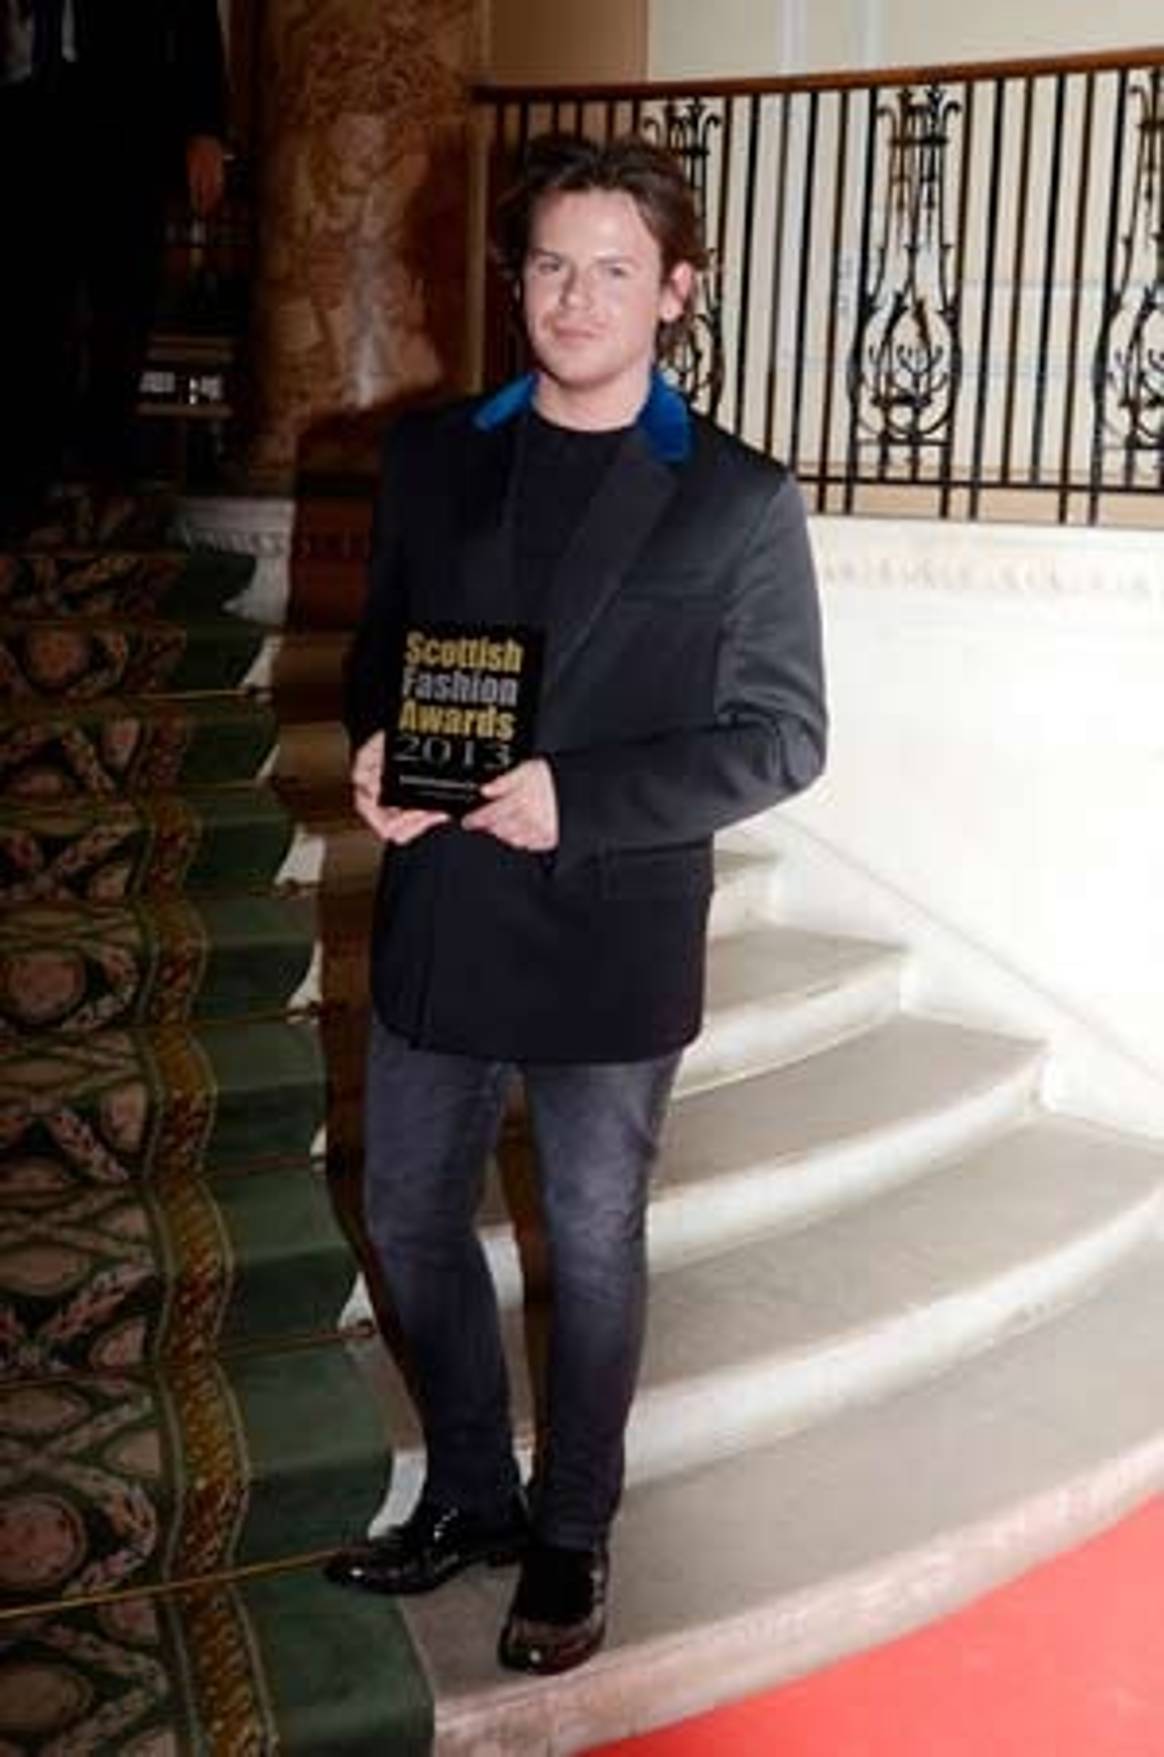 Christopher Kane triumphs at Scottish Fashion Awards